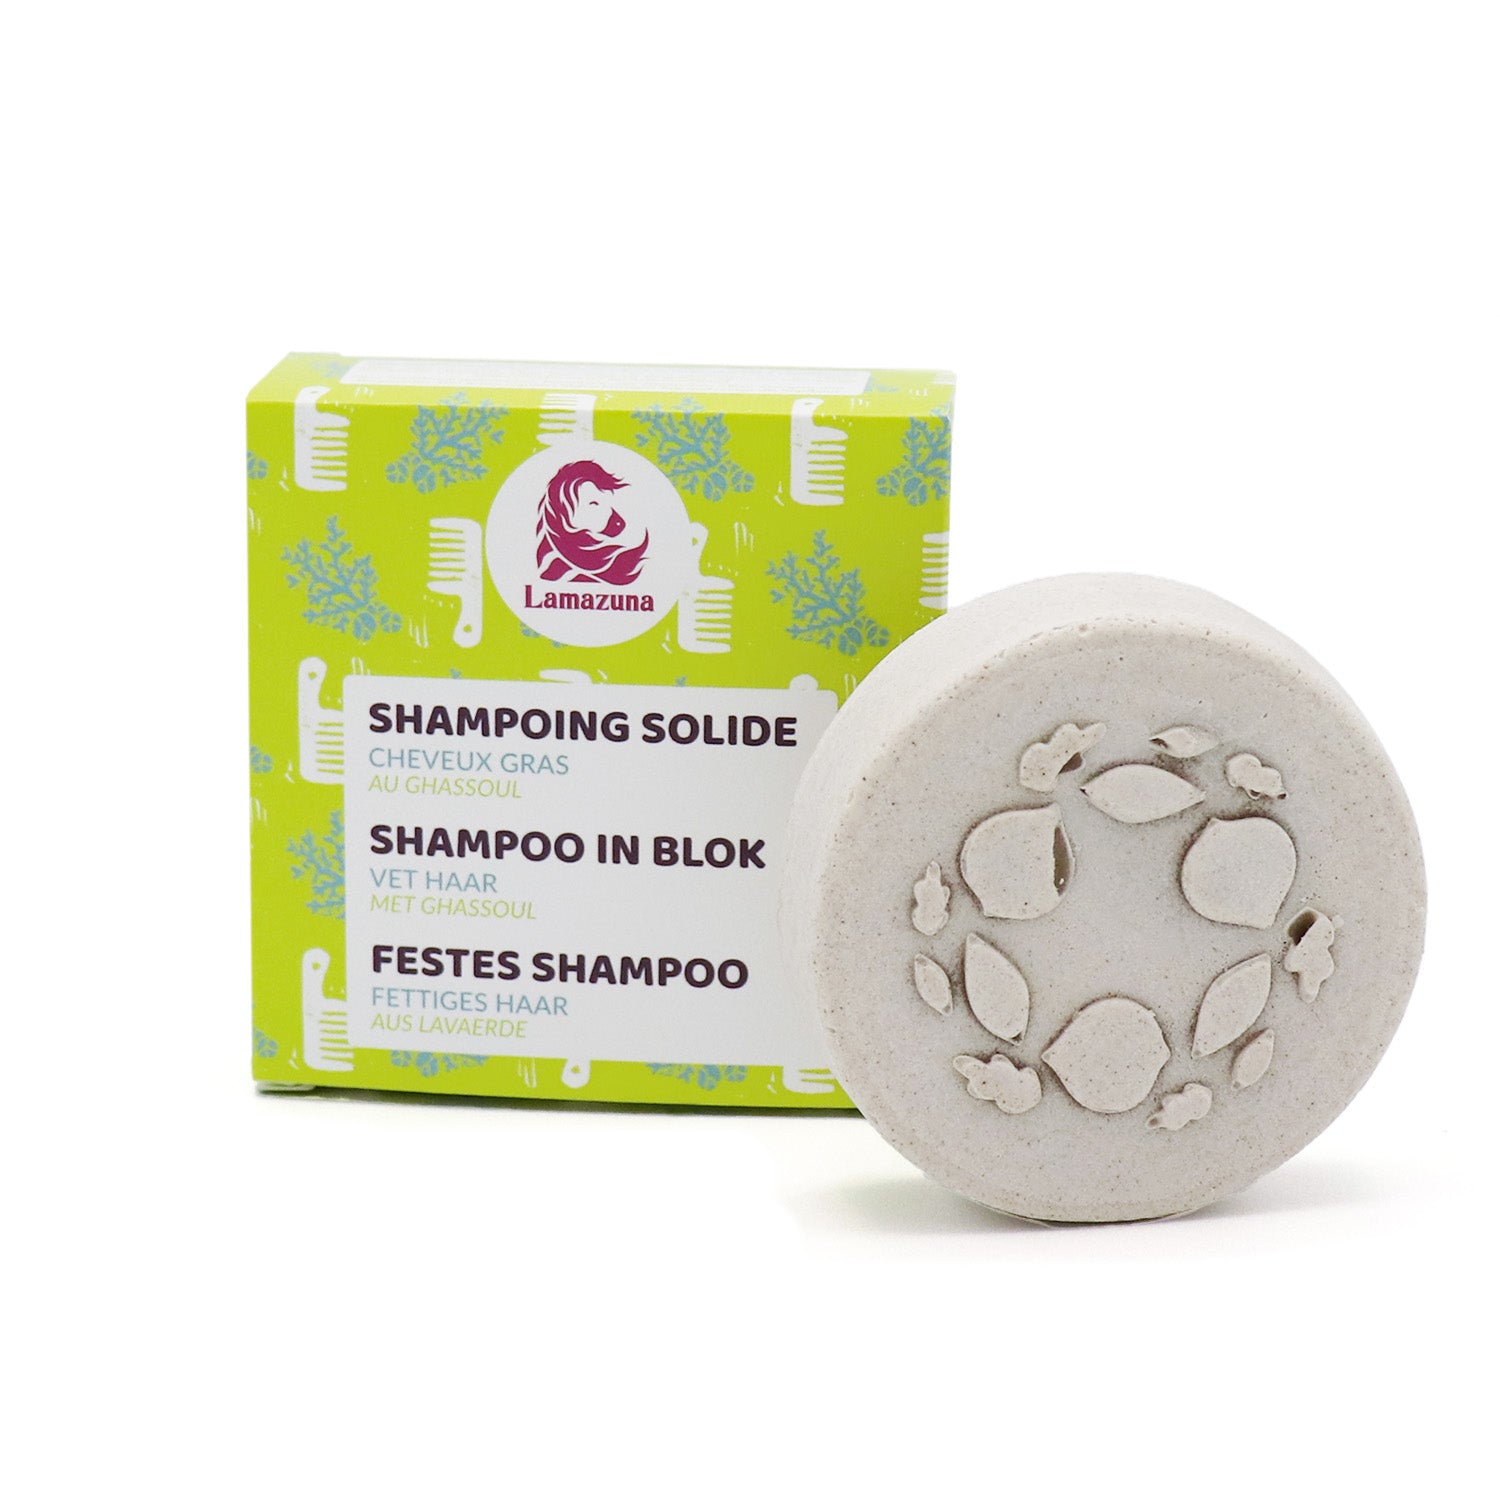 Lamazuna Festes Shampoo "fettiges Haar" - LAVAERDE 70 ml